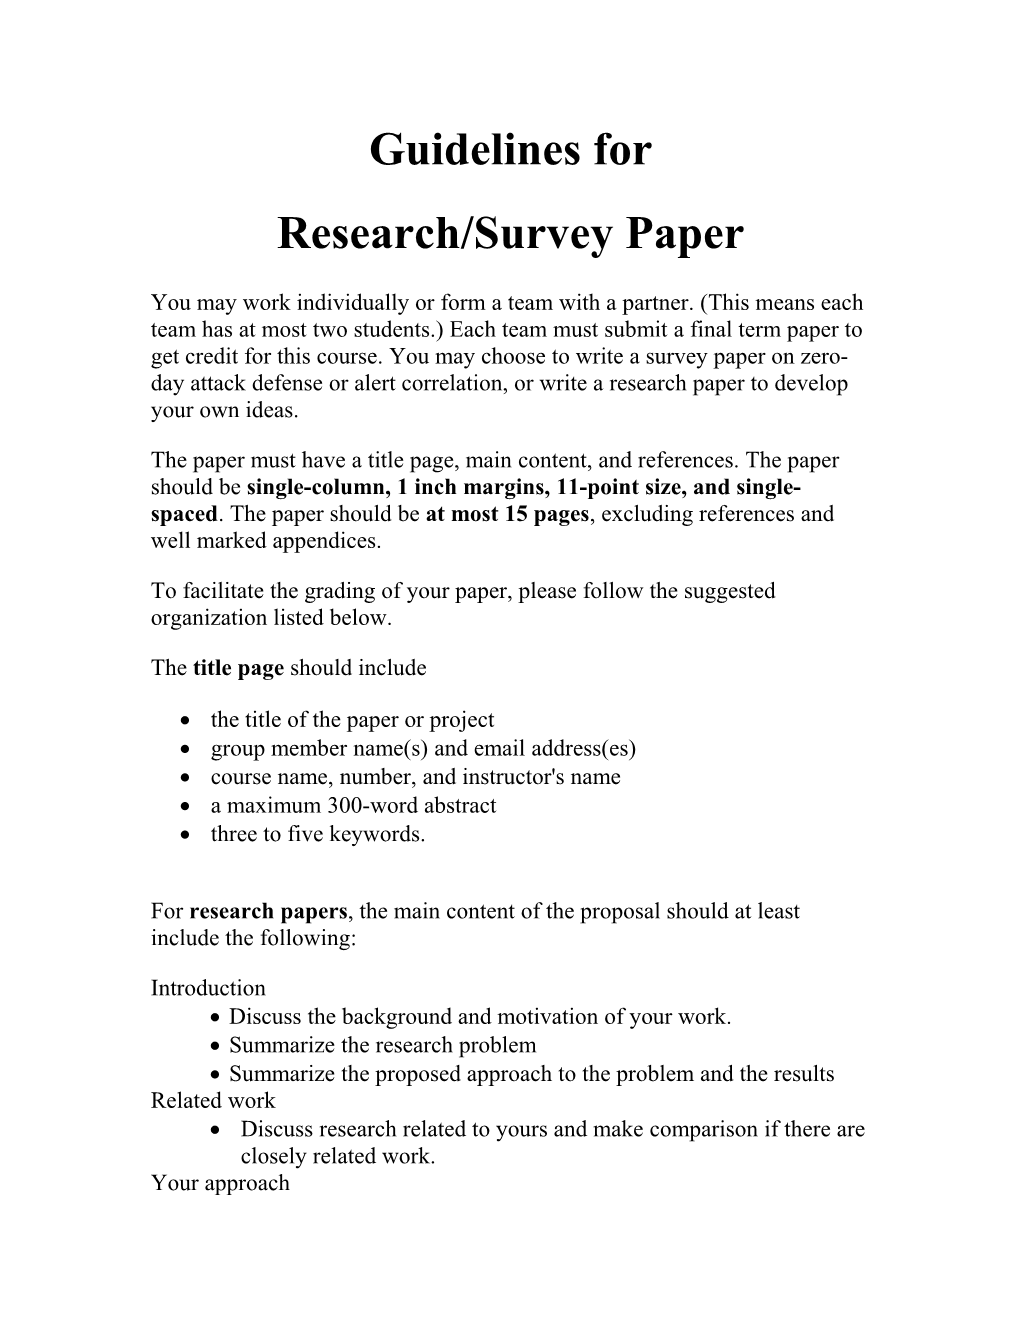 Research/Survey Paper